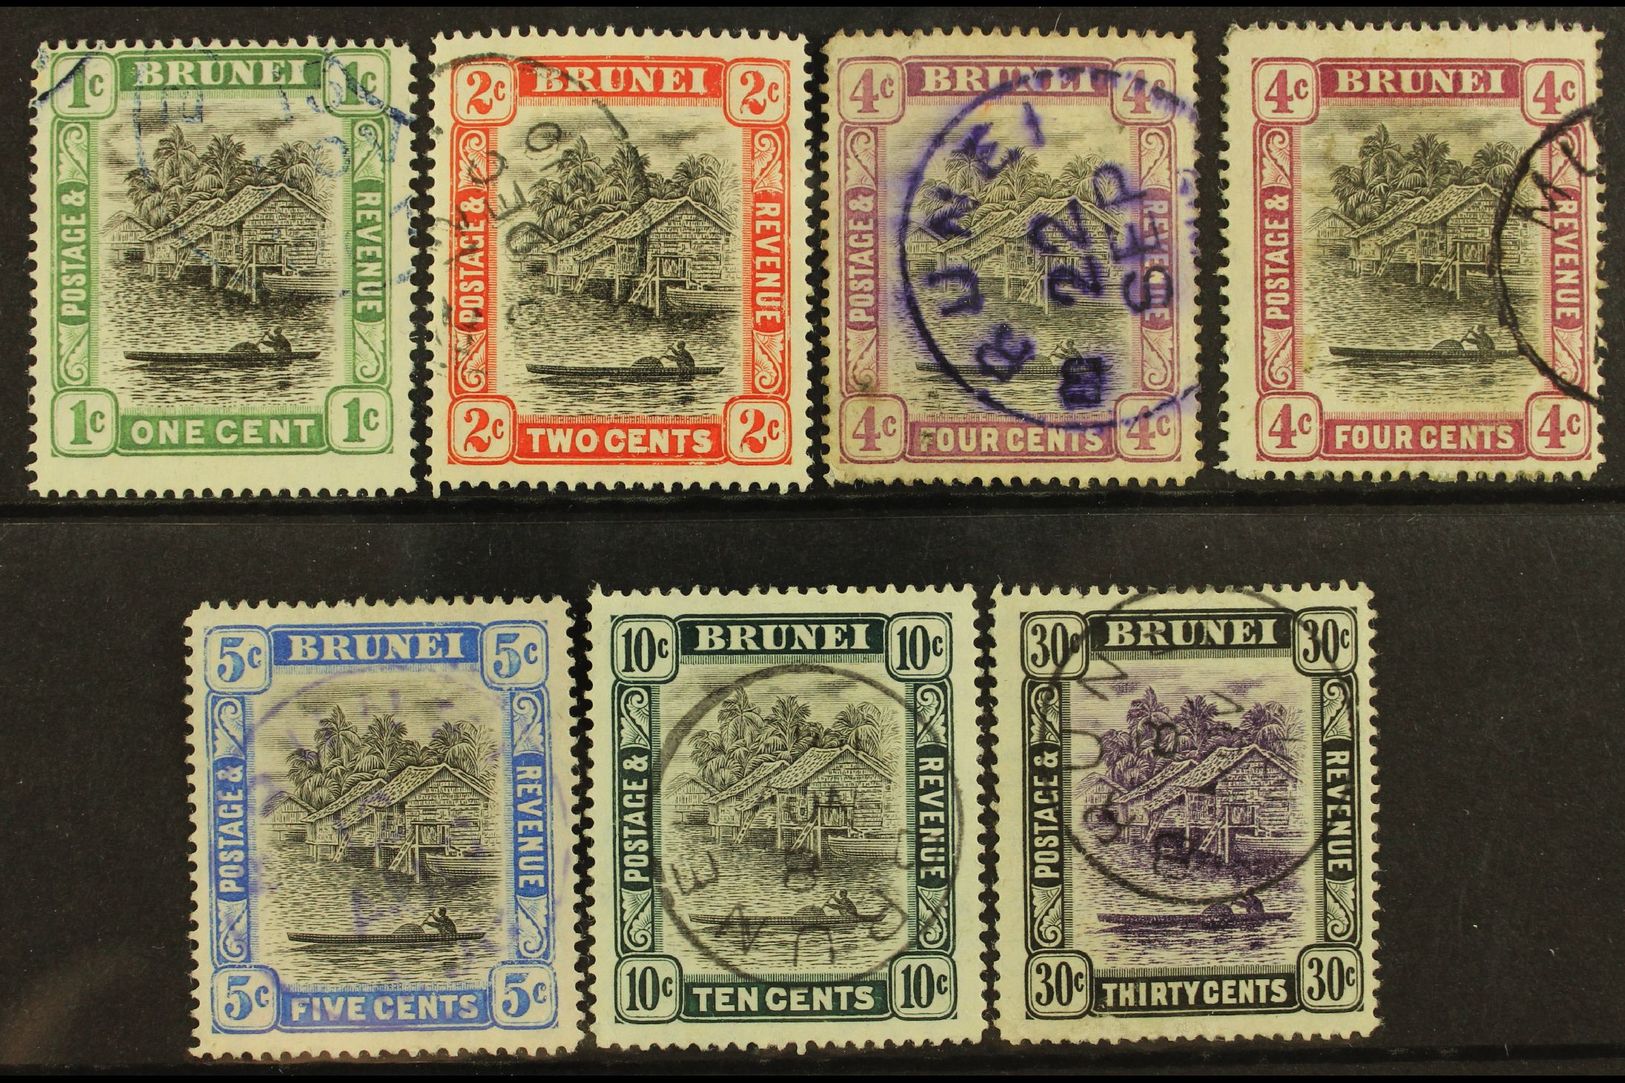 1907-10  1c, 2c, Both 4c Shades, 5c, 10c And 30c, Fine Cds Used. (7) For More Images, Please Visit Http://www.sandafayre - Brunei (...-1984)